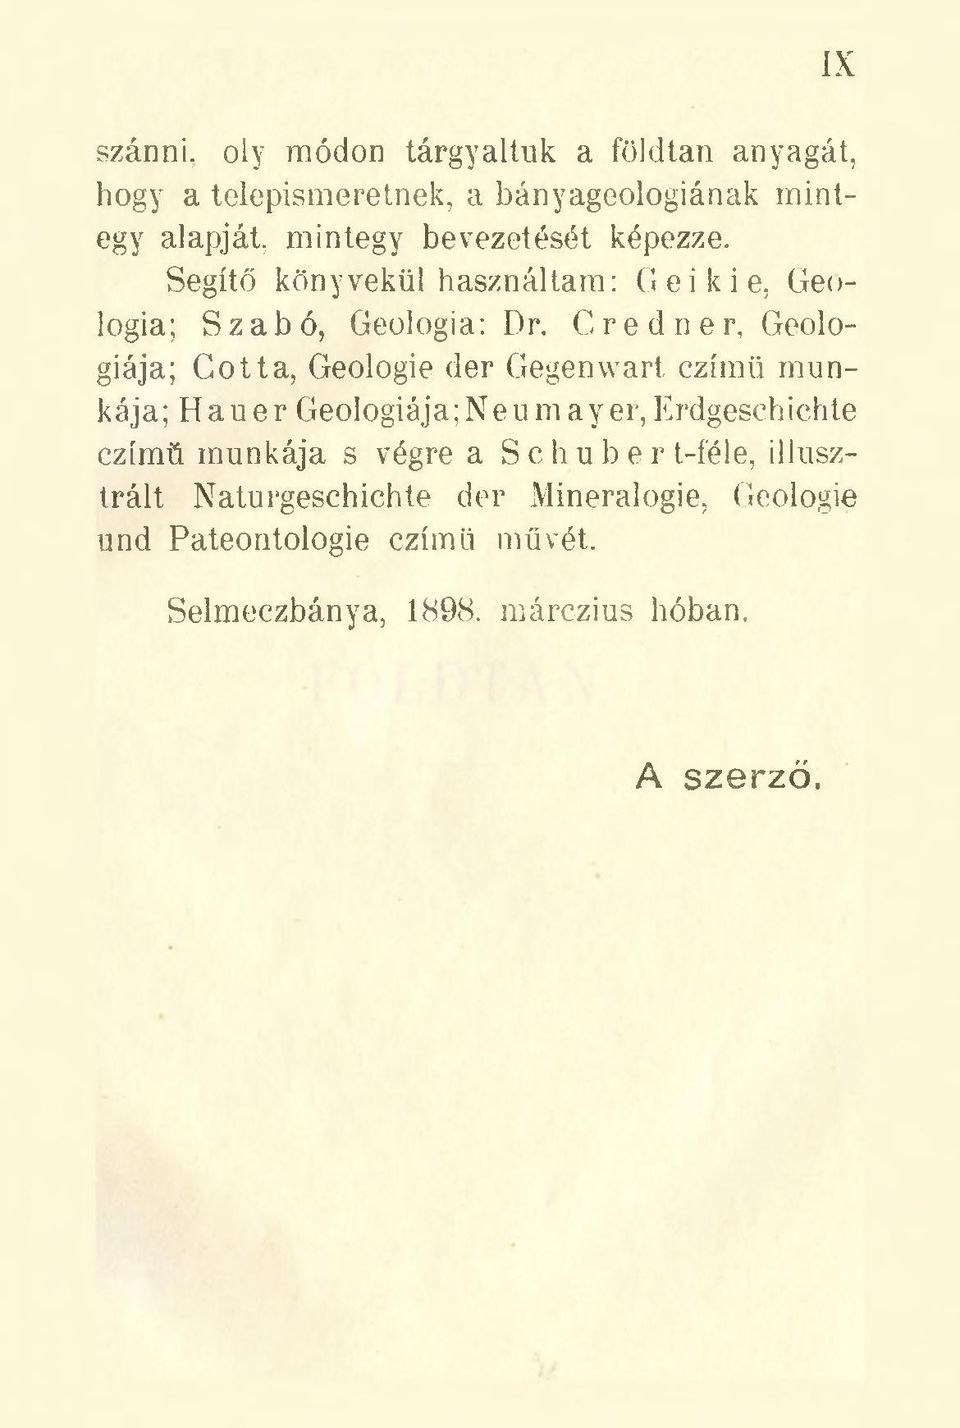 Credner, Geológiája; C o tta, Geologie dér Gegenwart czímü munkája; Hauer Geológiája;Neumay er, Erdgeschichte czímü